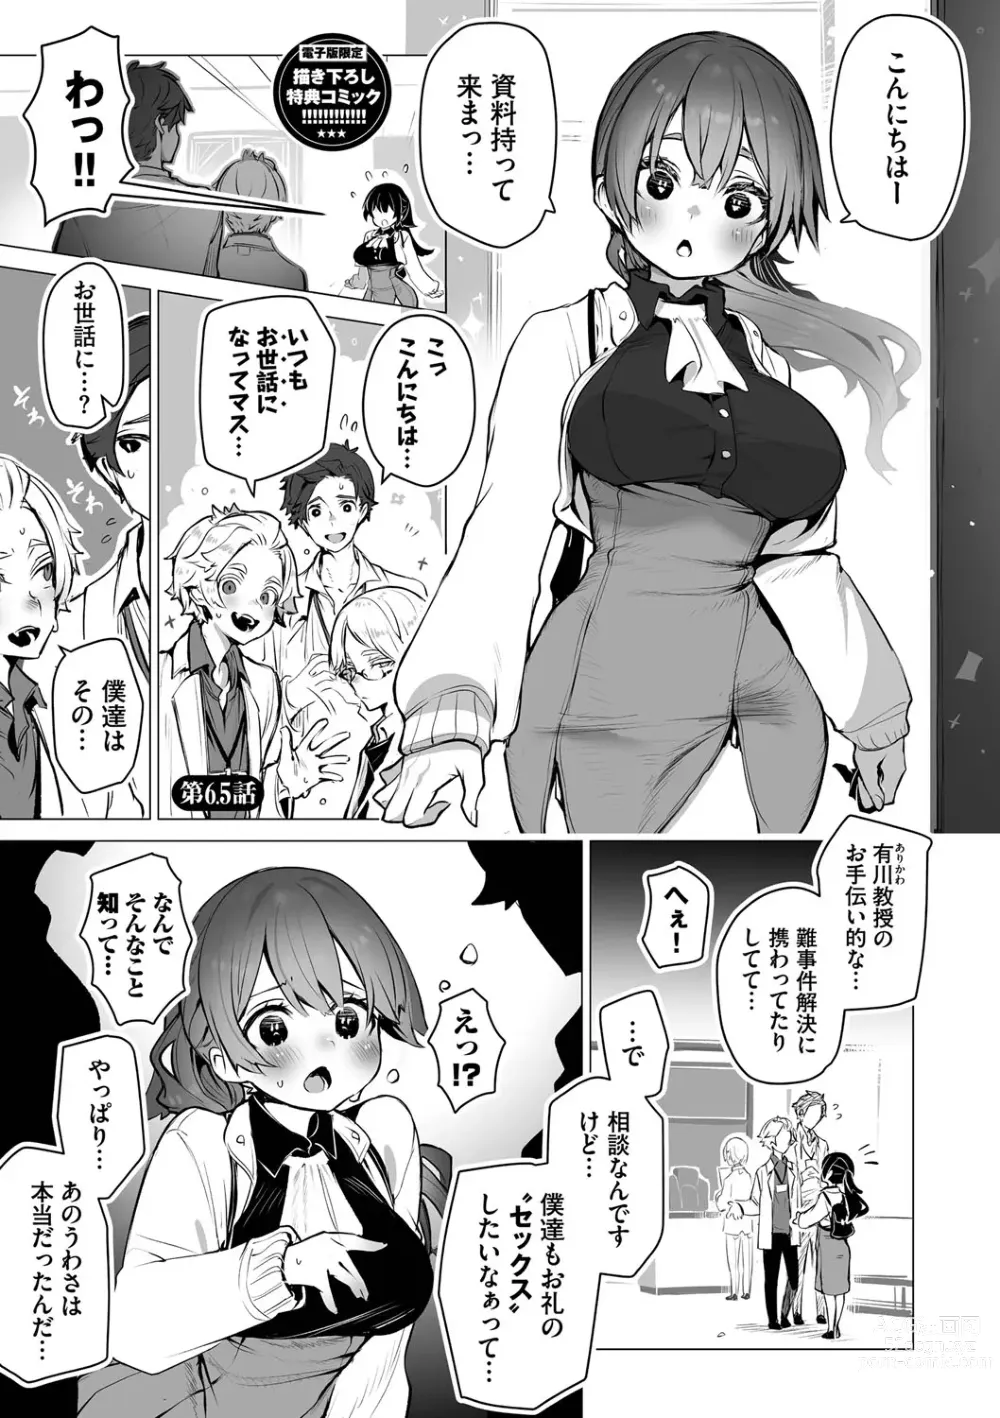 Page 194 of manga Tokyo Black Box 1